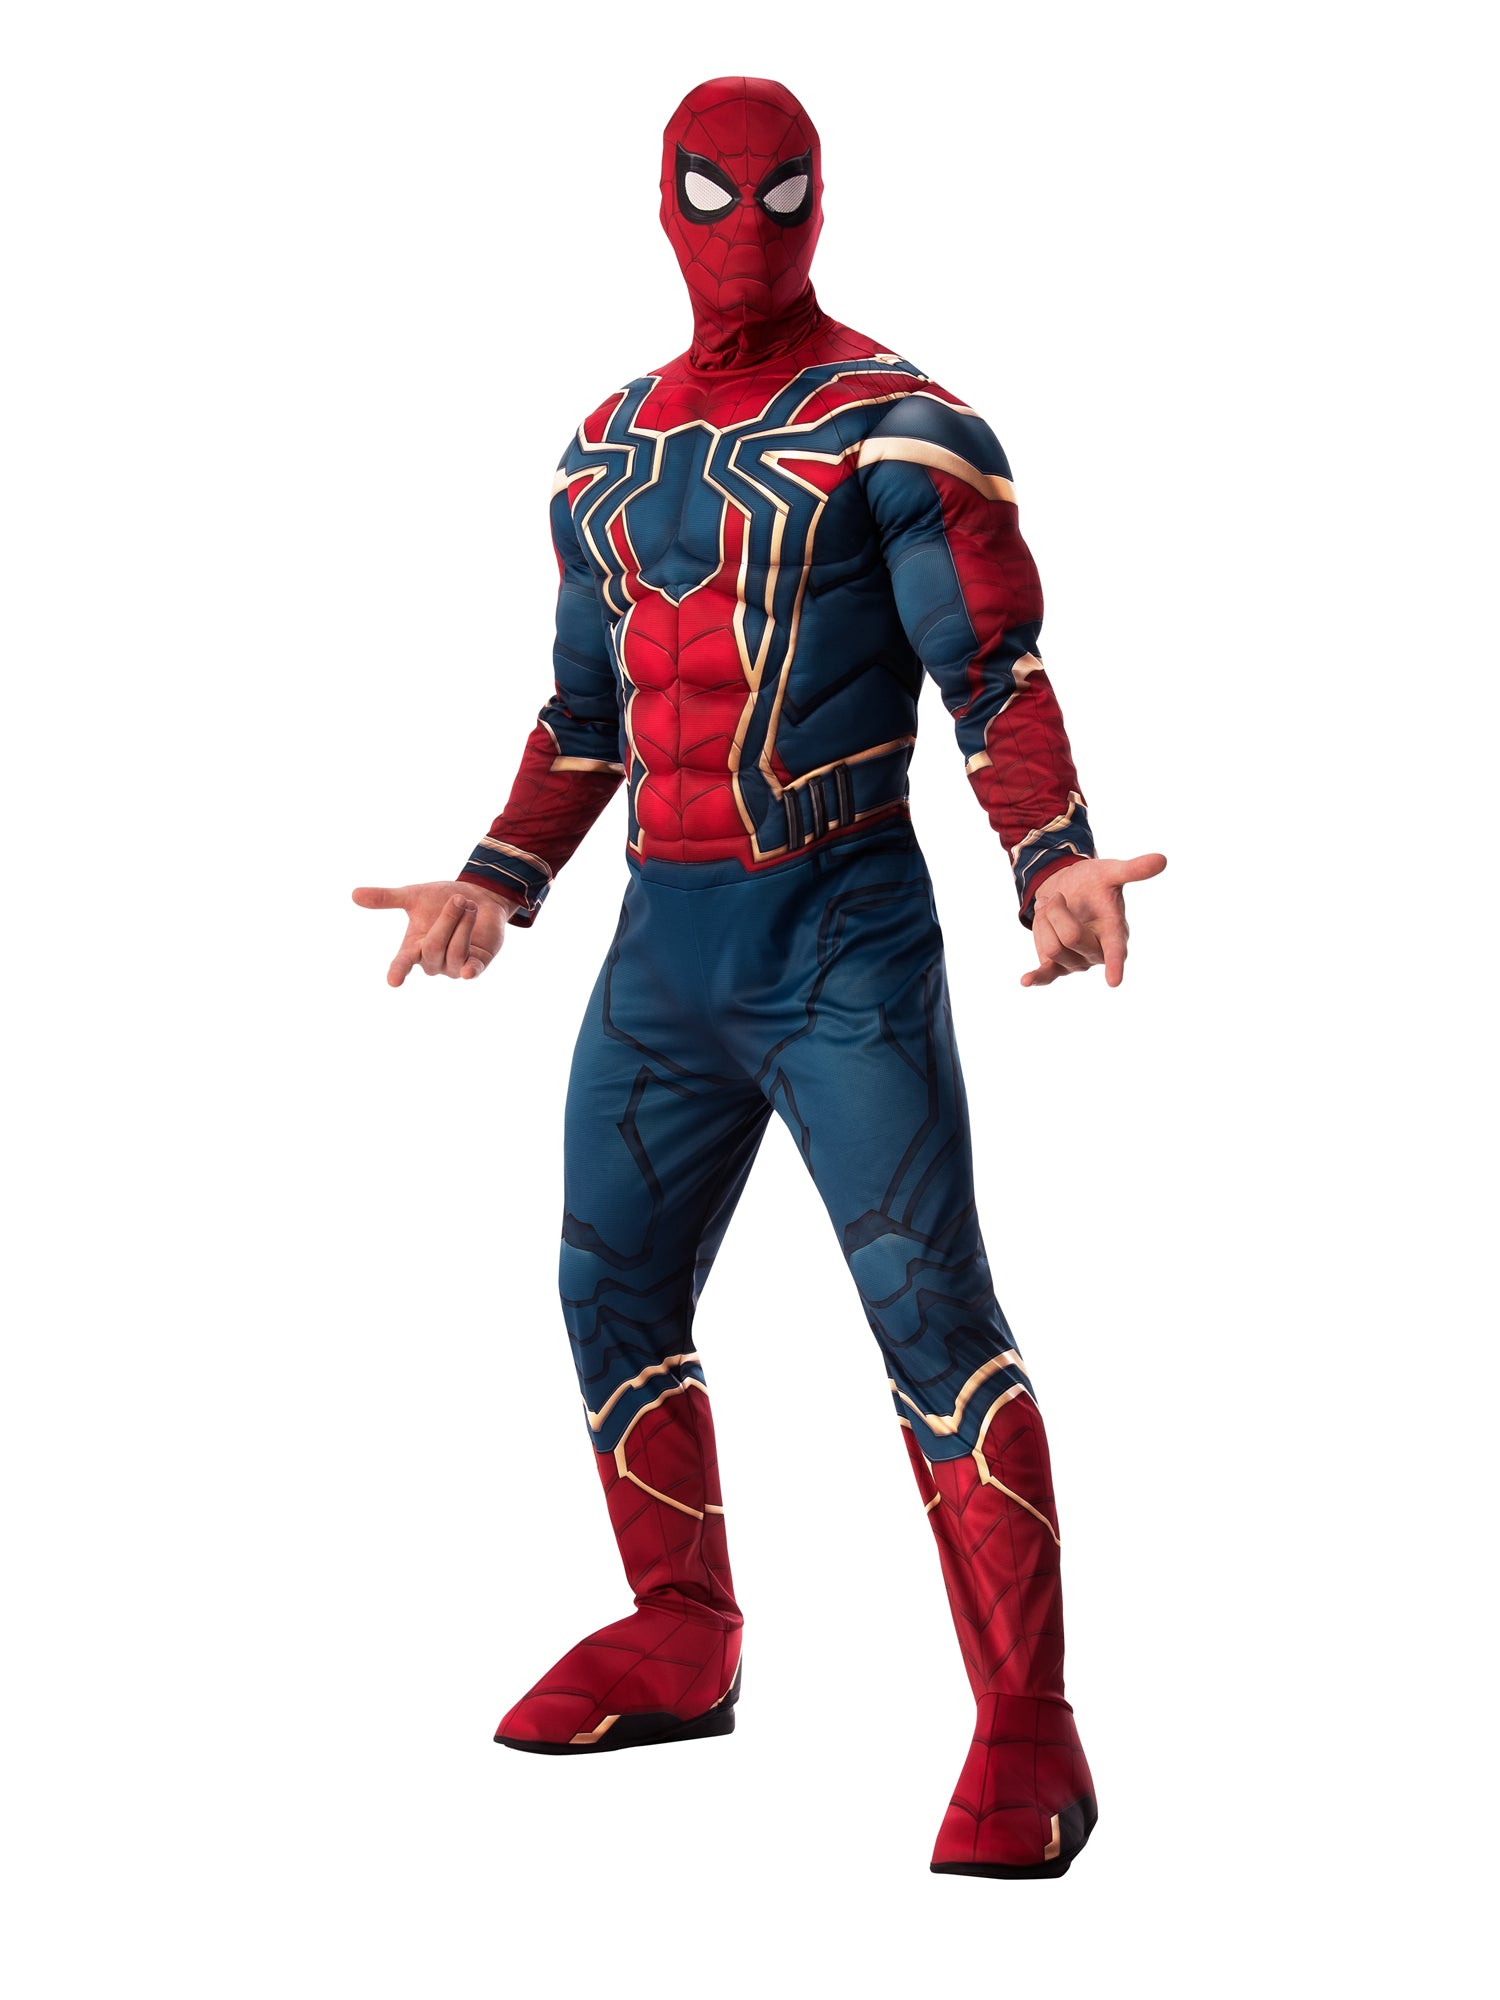 Iron Spider, Endgame, Avengers, Endgame, Multi, Marvel, Adult Costume, Extra Large, Front